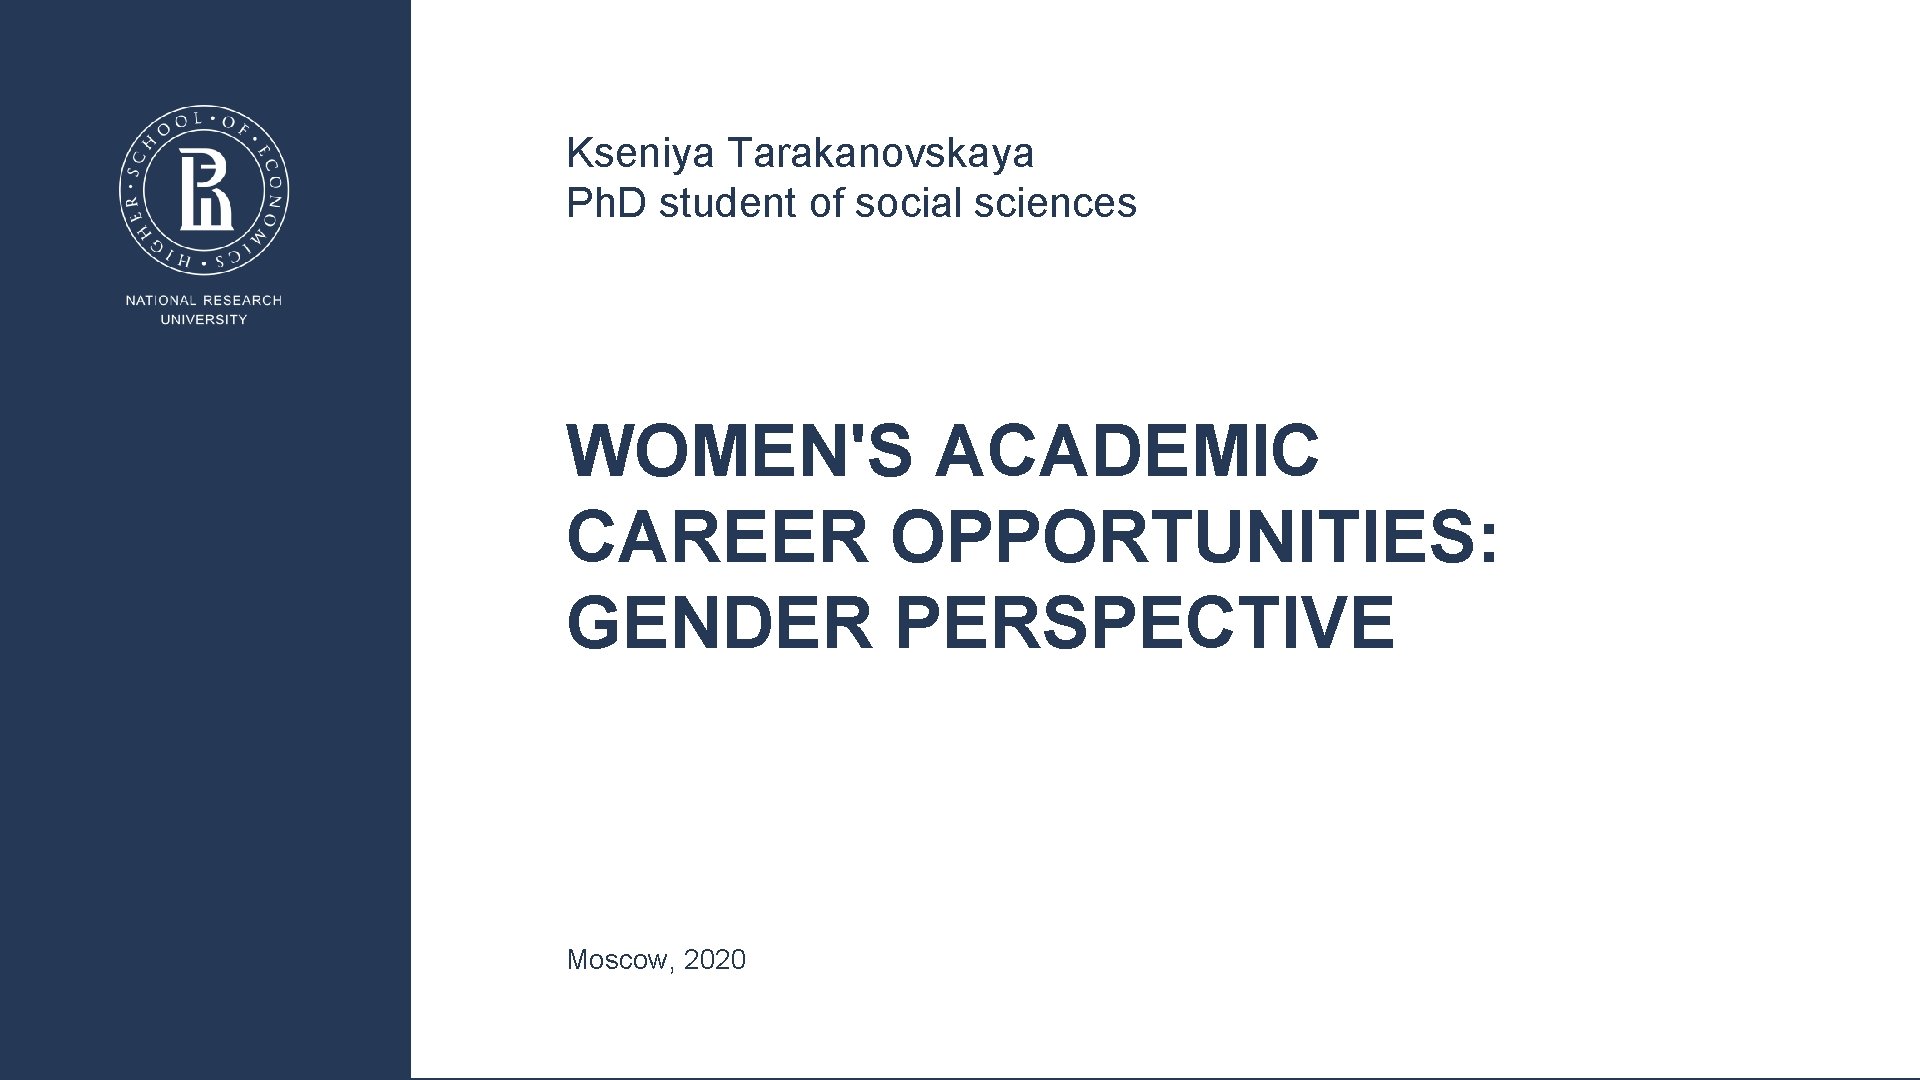 Kseniya Tarakanovskaya Ph. D student of social sciences WOMEN'S ACADEMIC CAREER OPPORTUNITIES: GENDER PERSPECTIVE